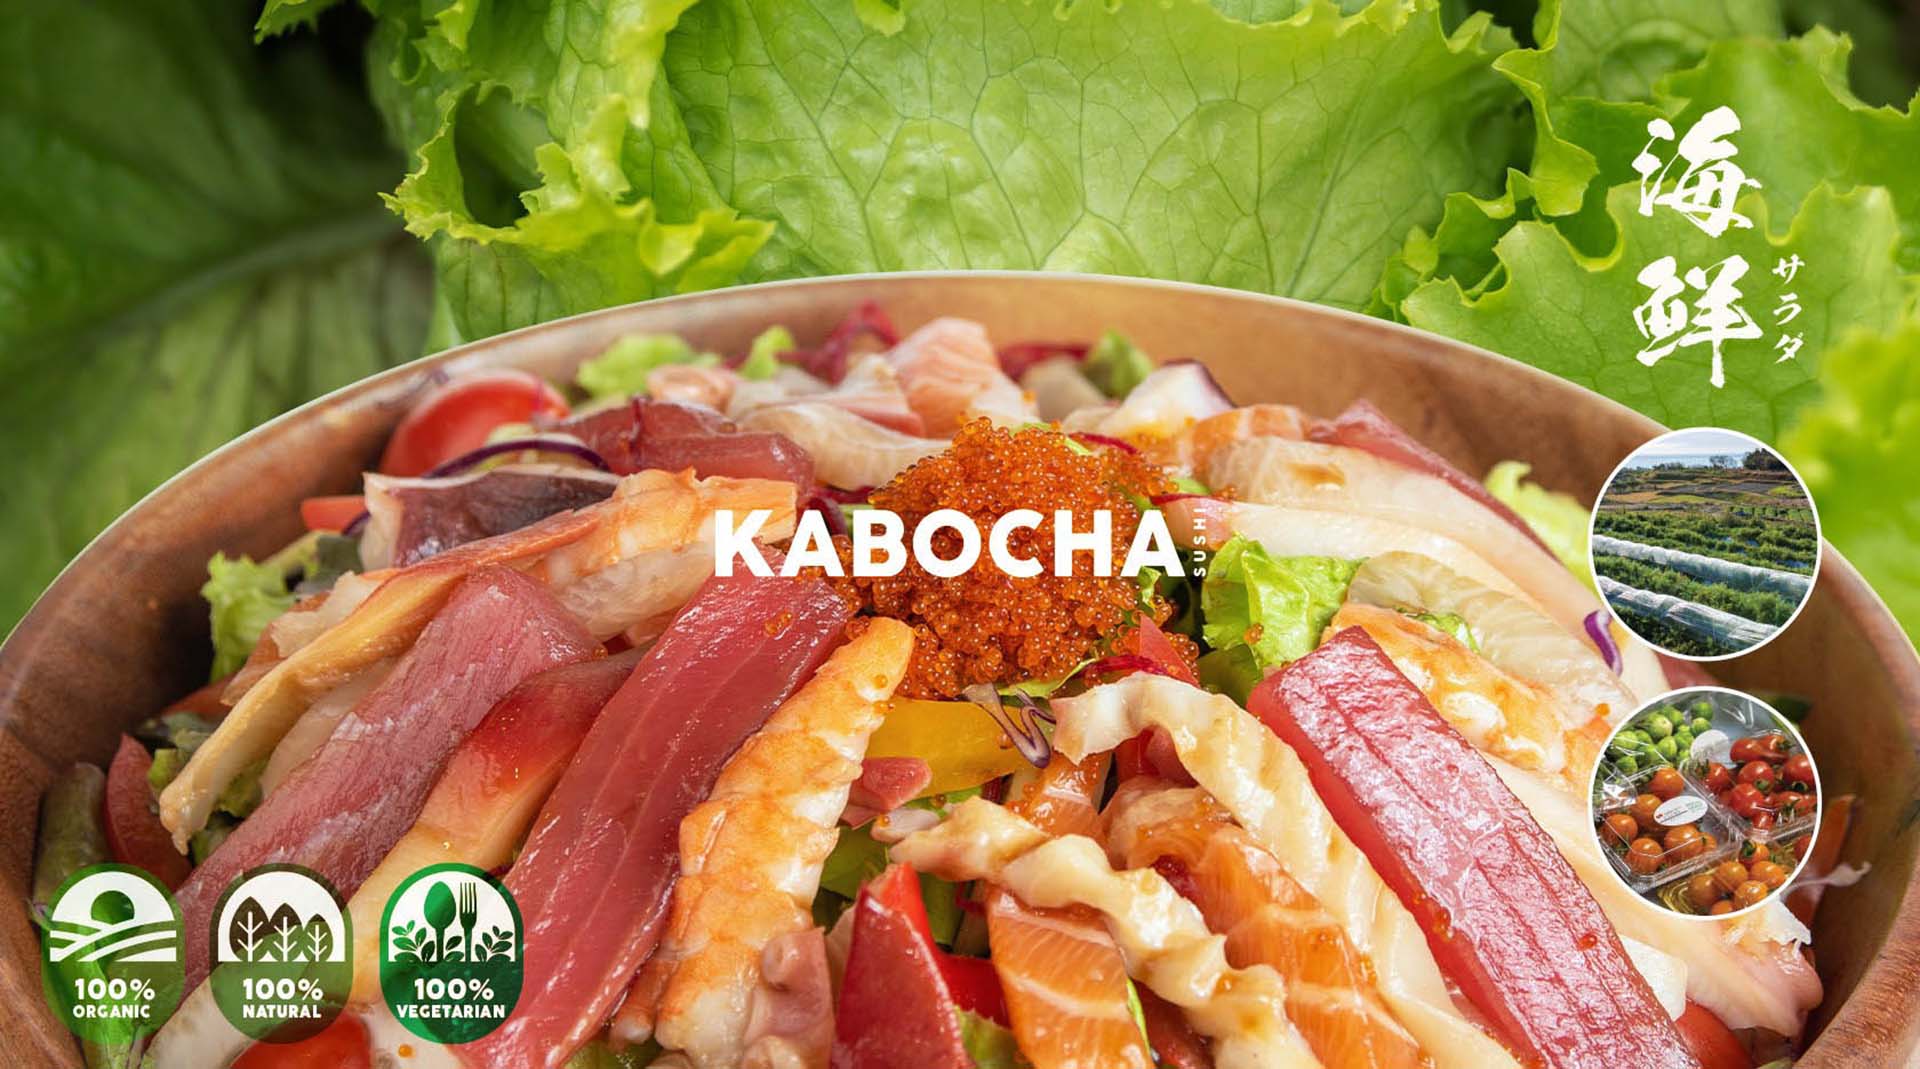 Kabocha Sushi คาโบฉะ ซูชิ ร้านอาหารญี่ปุ่น delivery นำเข้าวัตถุดิบจาก ญี่ปุ่น